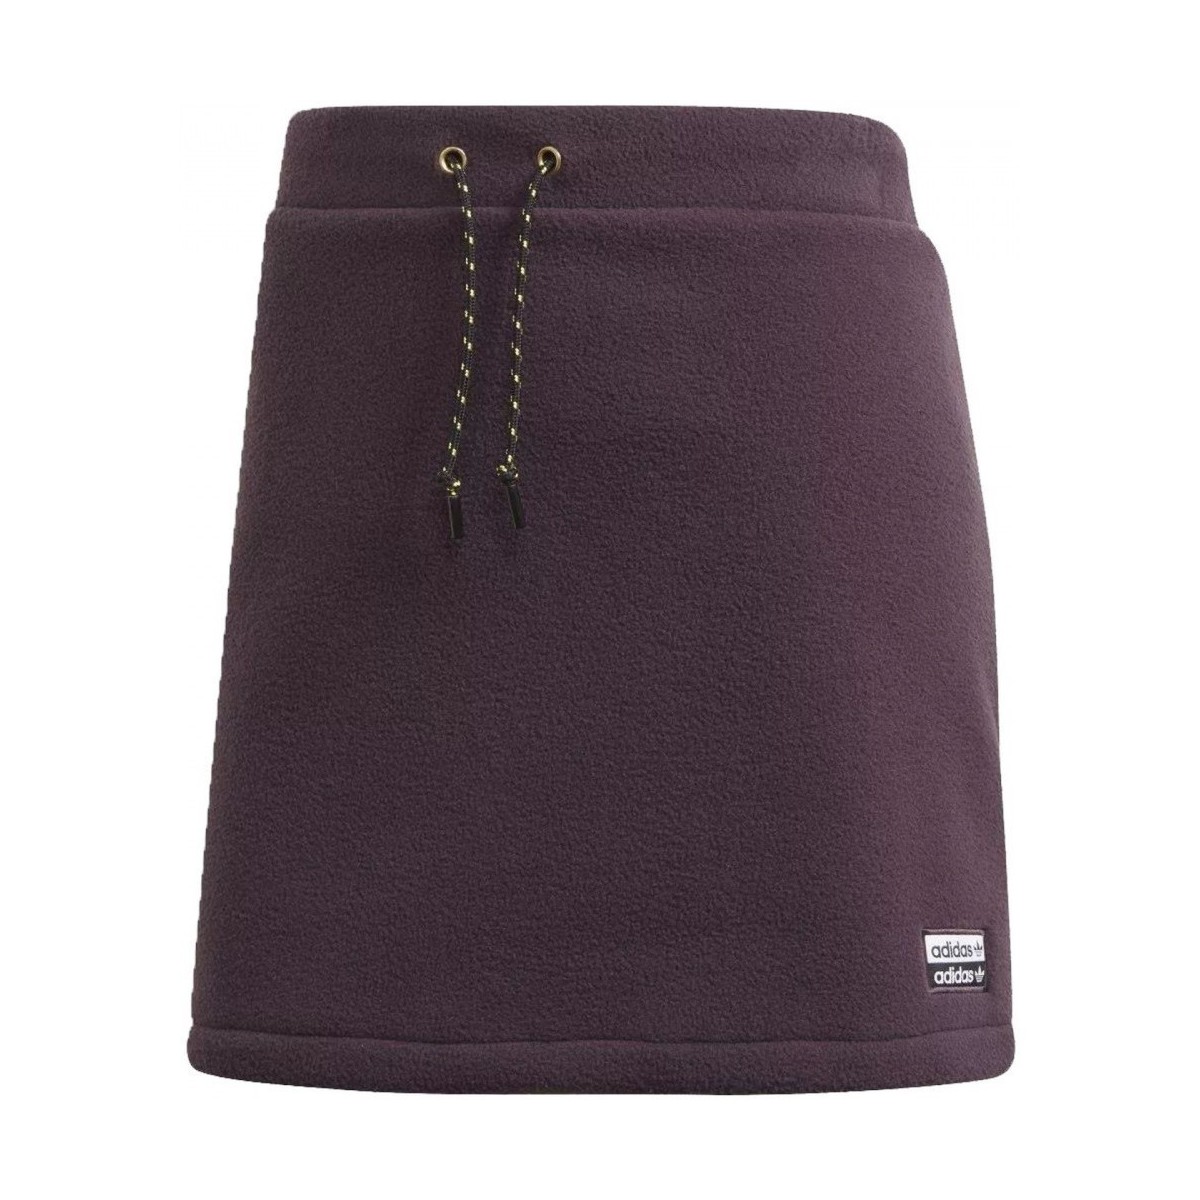 Textil Mulher Saias adidas Originals Skirt Violeta